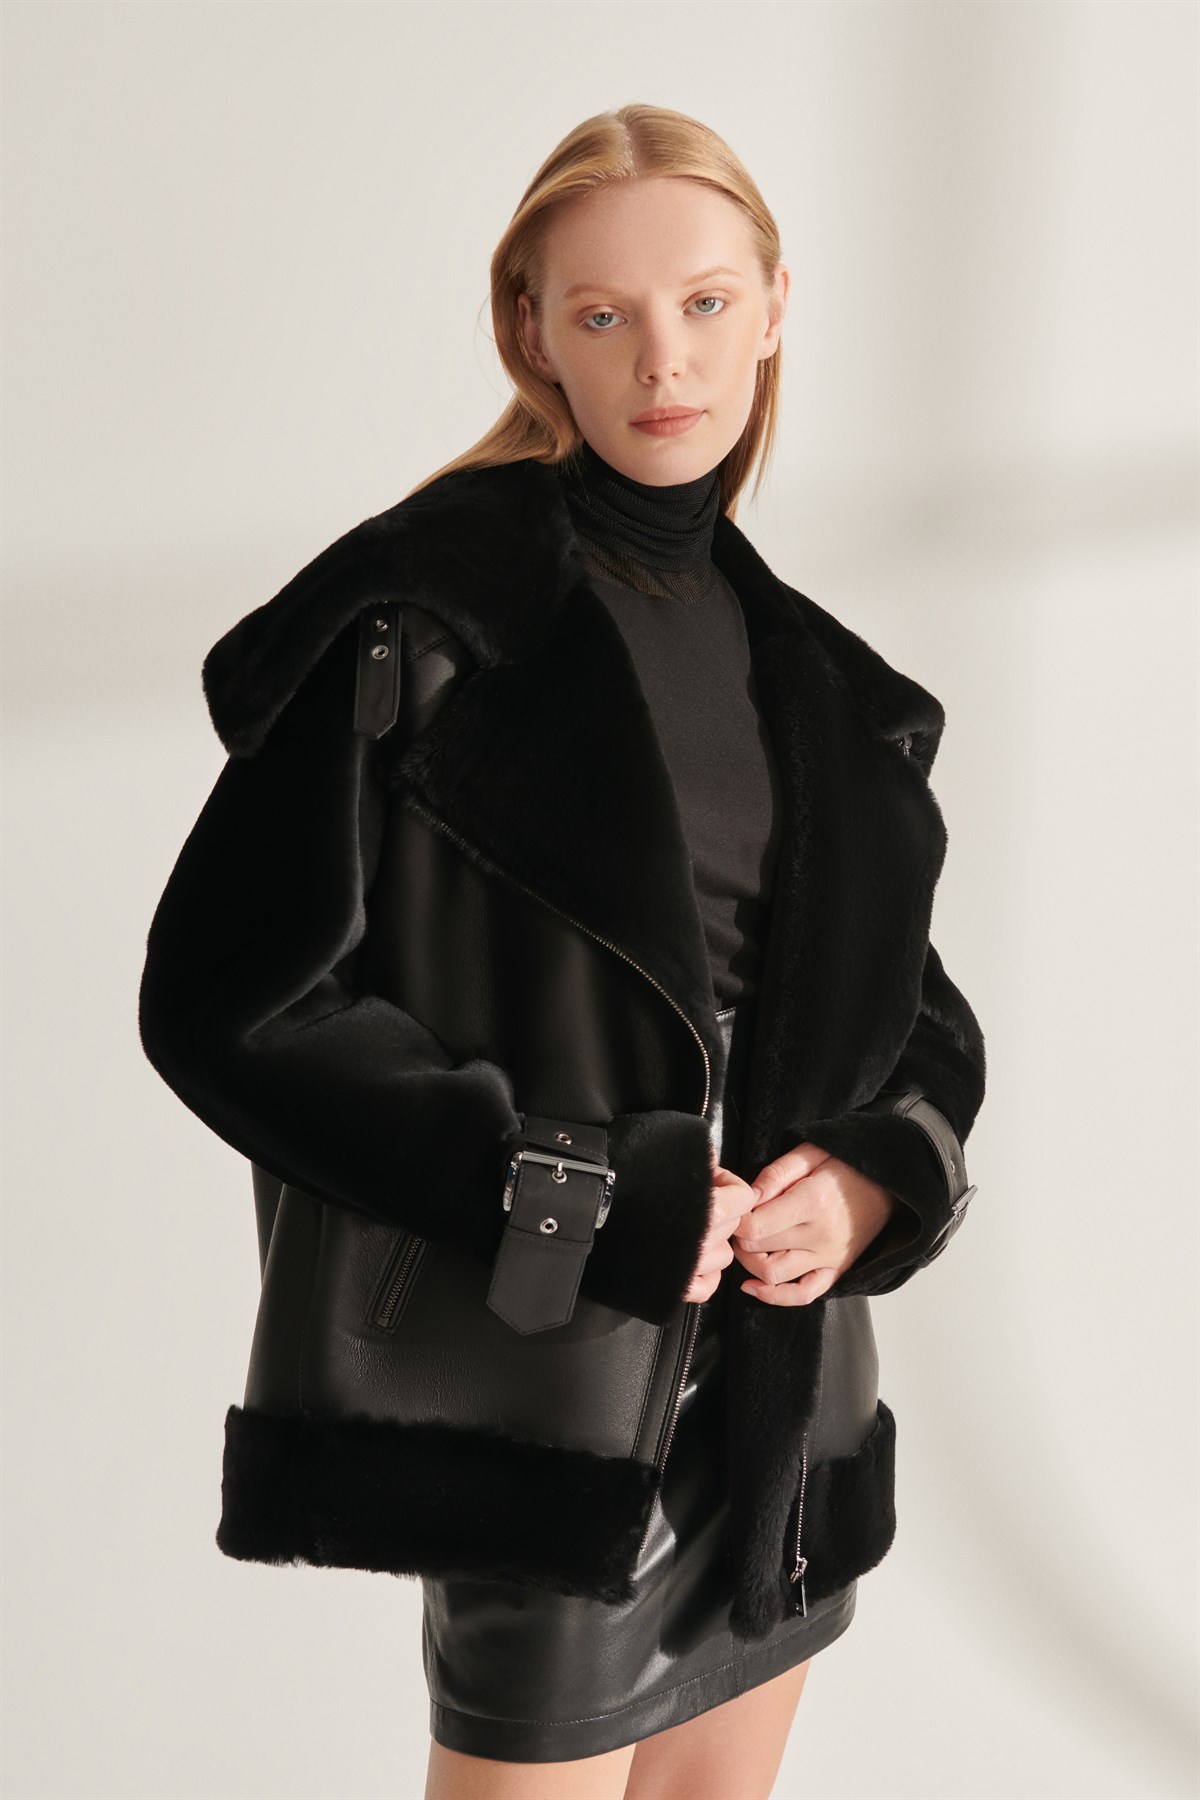 ISABELLA Women's Black Oversize Shearling Leather Jacket | Women's ...